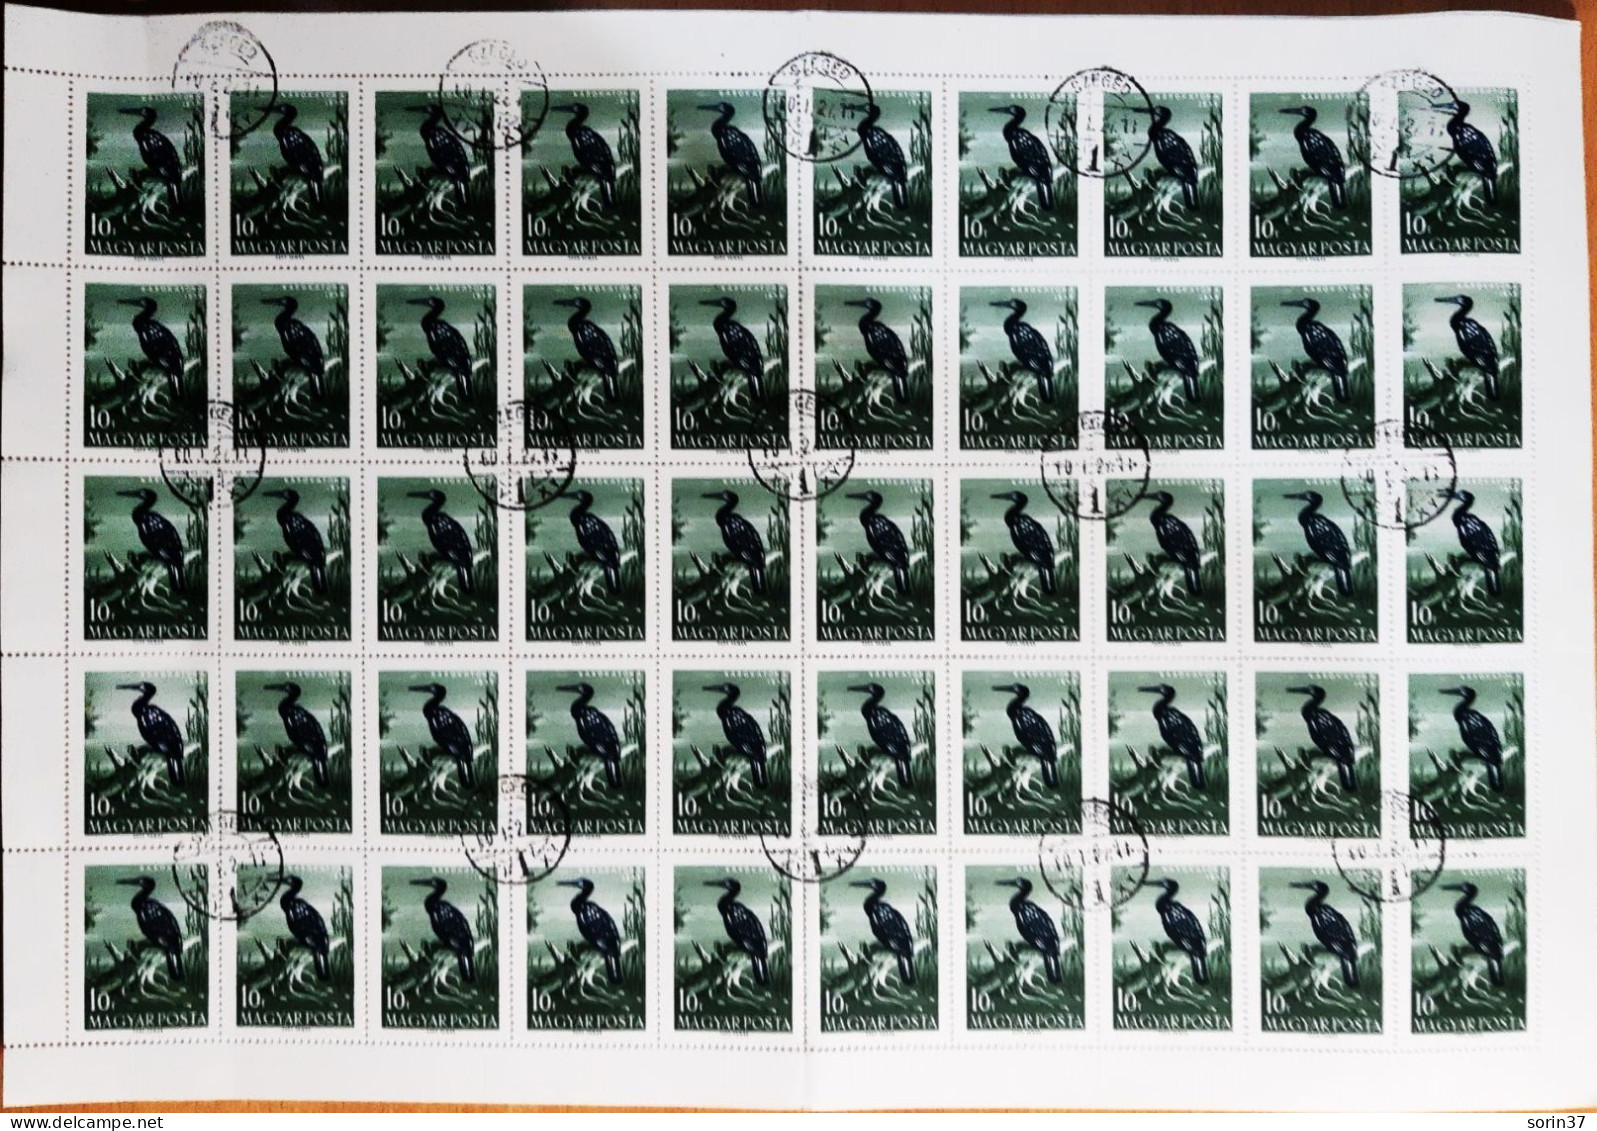 Hungria Pliego 50 Sellos Año 1959  Usado  Aves - Used Stamps